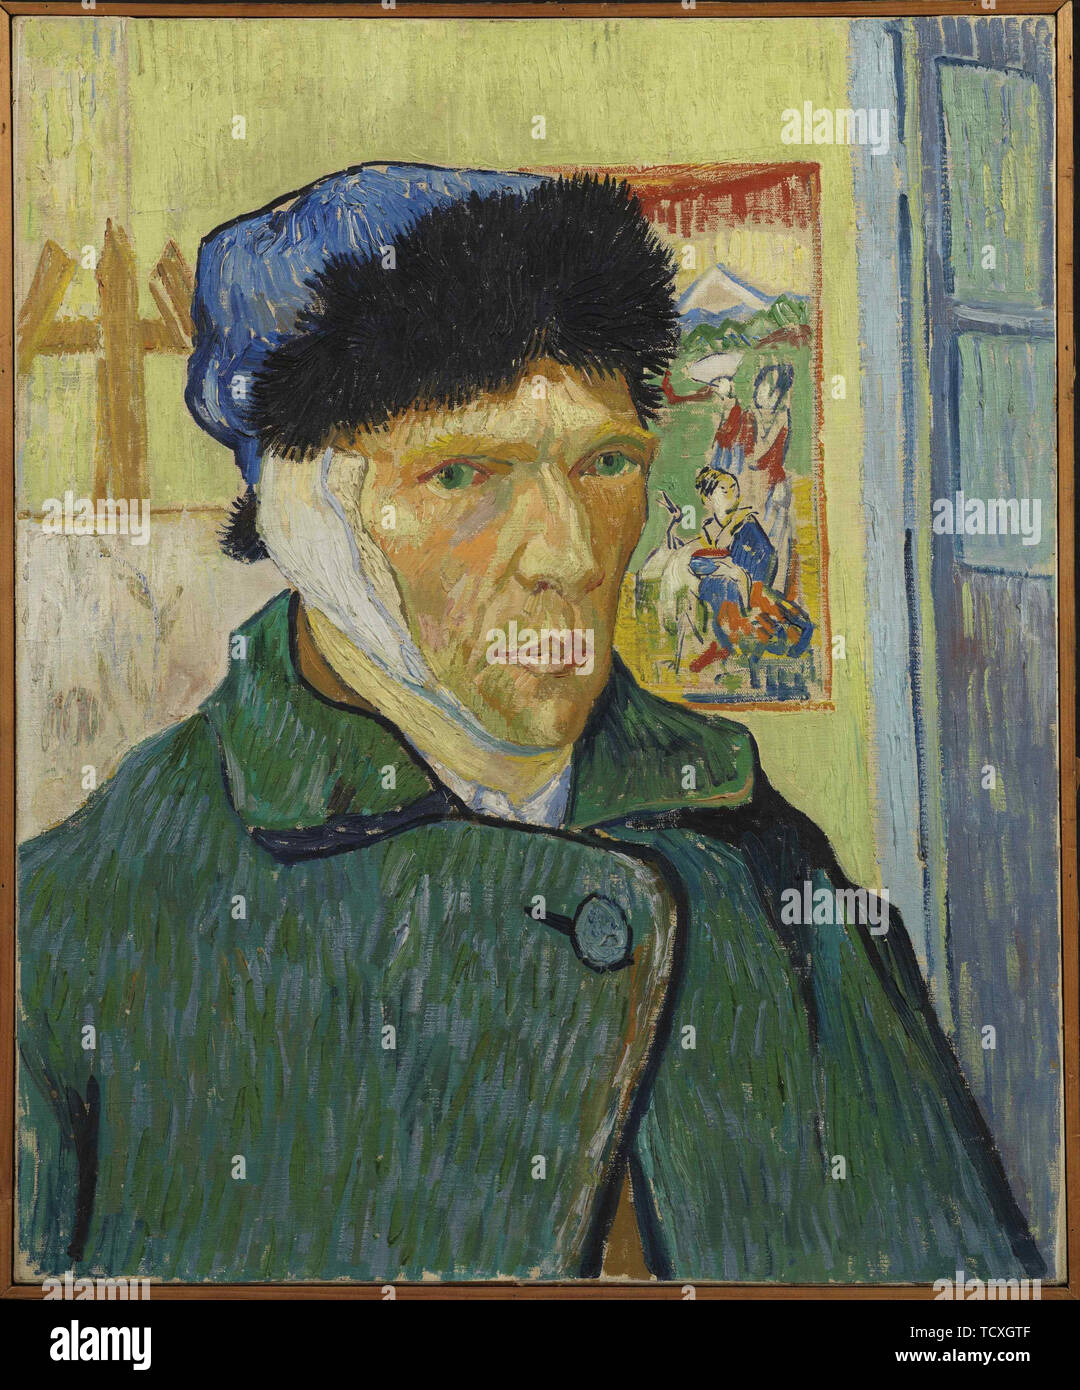 Autoportrait à l'oreille bandée (Autorretrato con oreja vendada), 1889. Creador: Gogh, Vincent van (1853-1890). Foto de stock